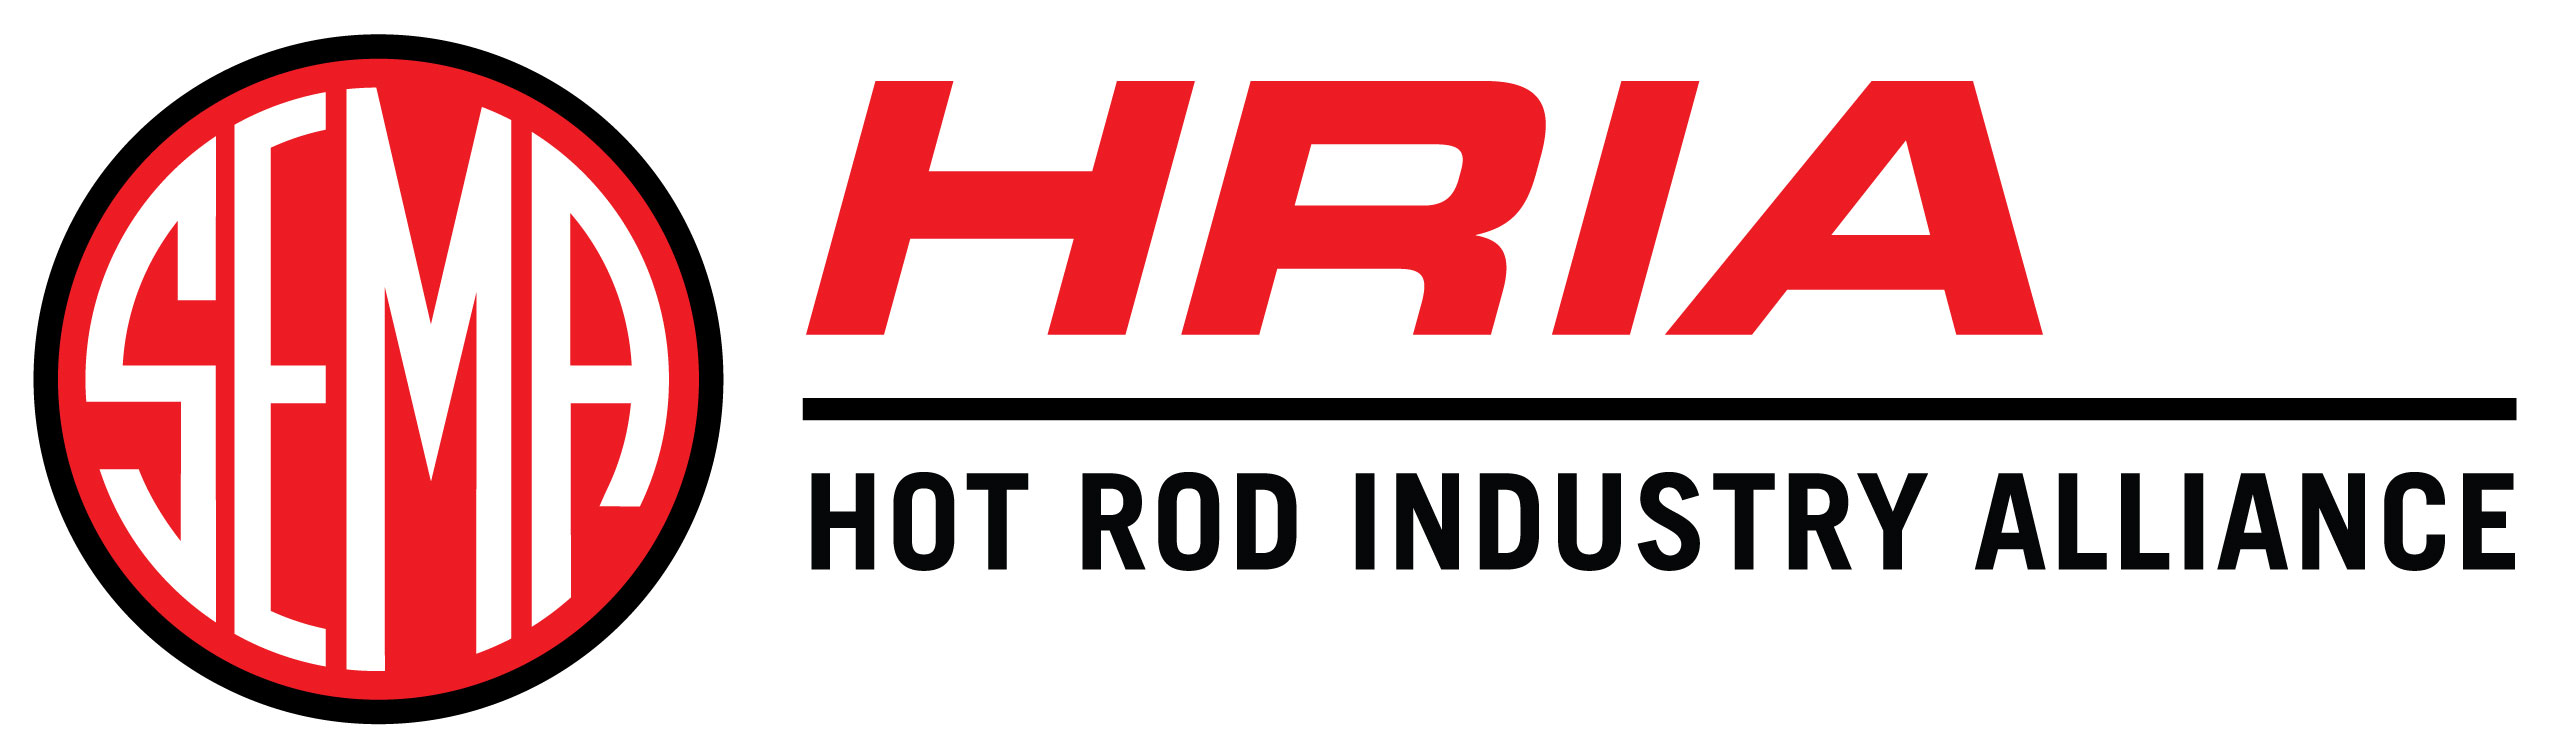 Hot Rod Industry Alliance (HRIA) - logo